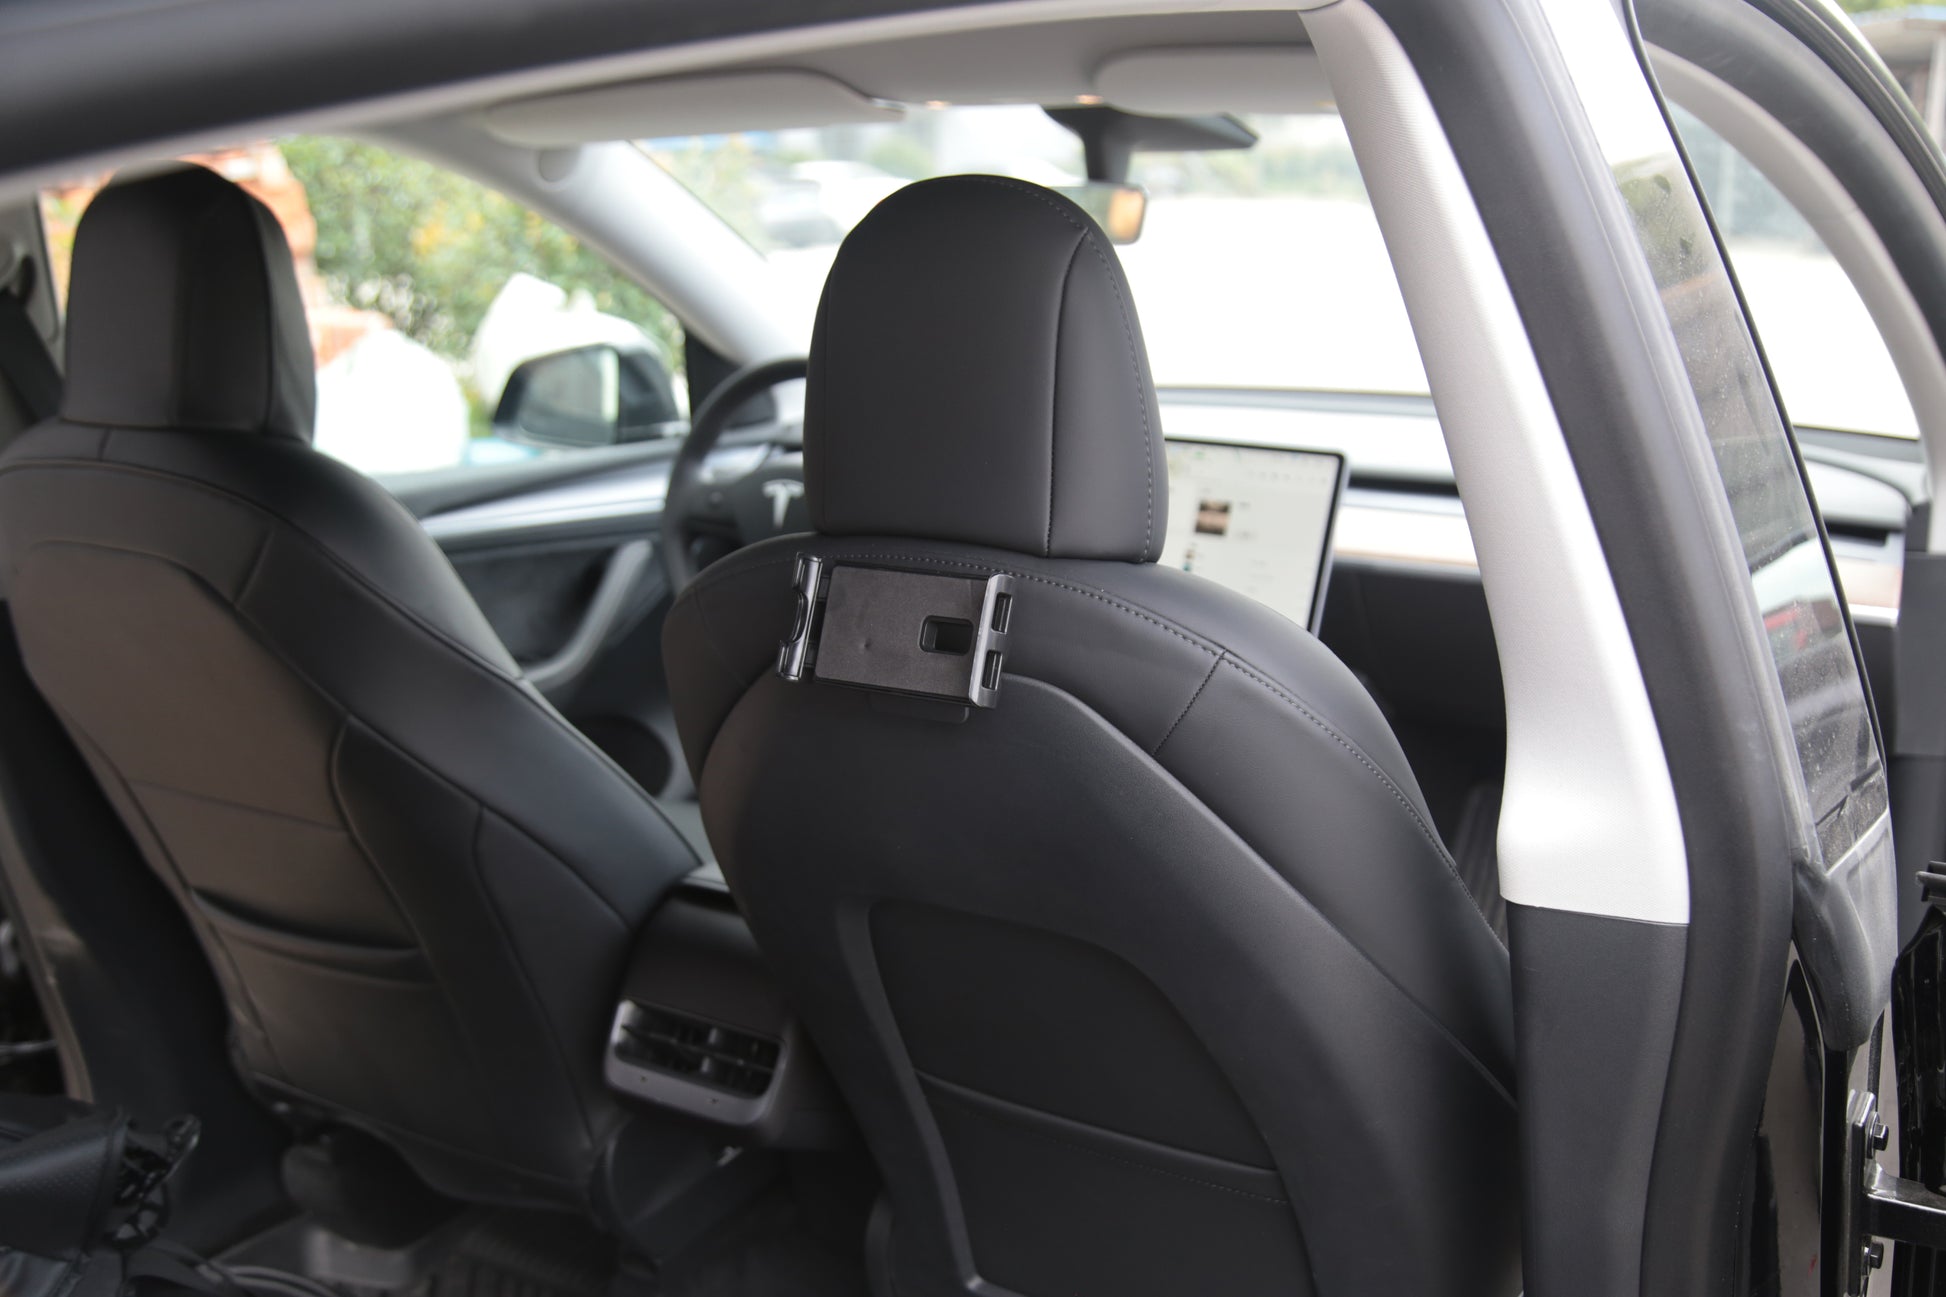 Model S/3/X/Y: Rear Seat Phone/Pad Holder